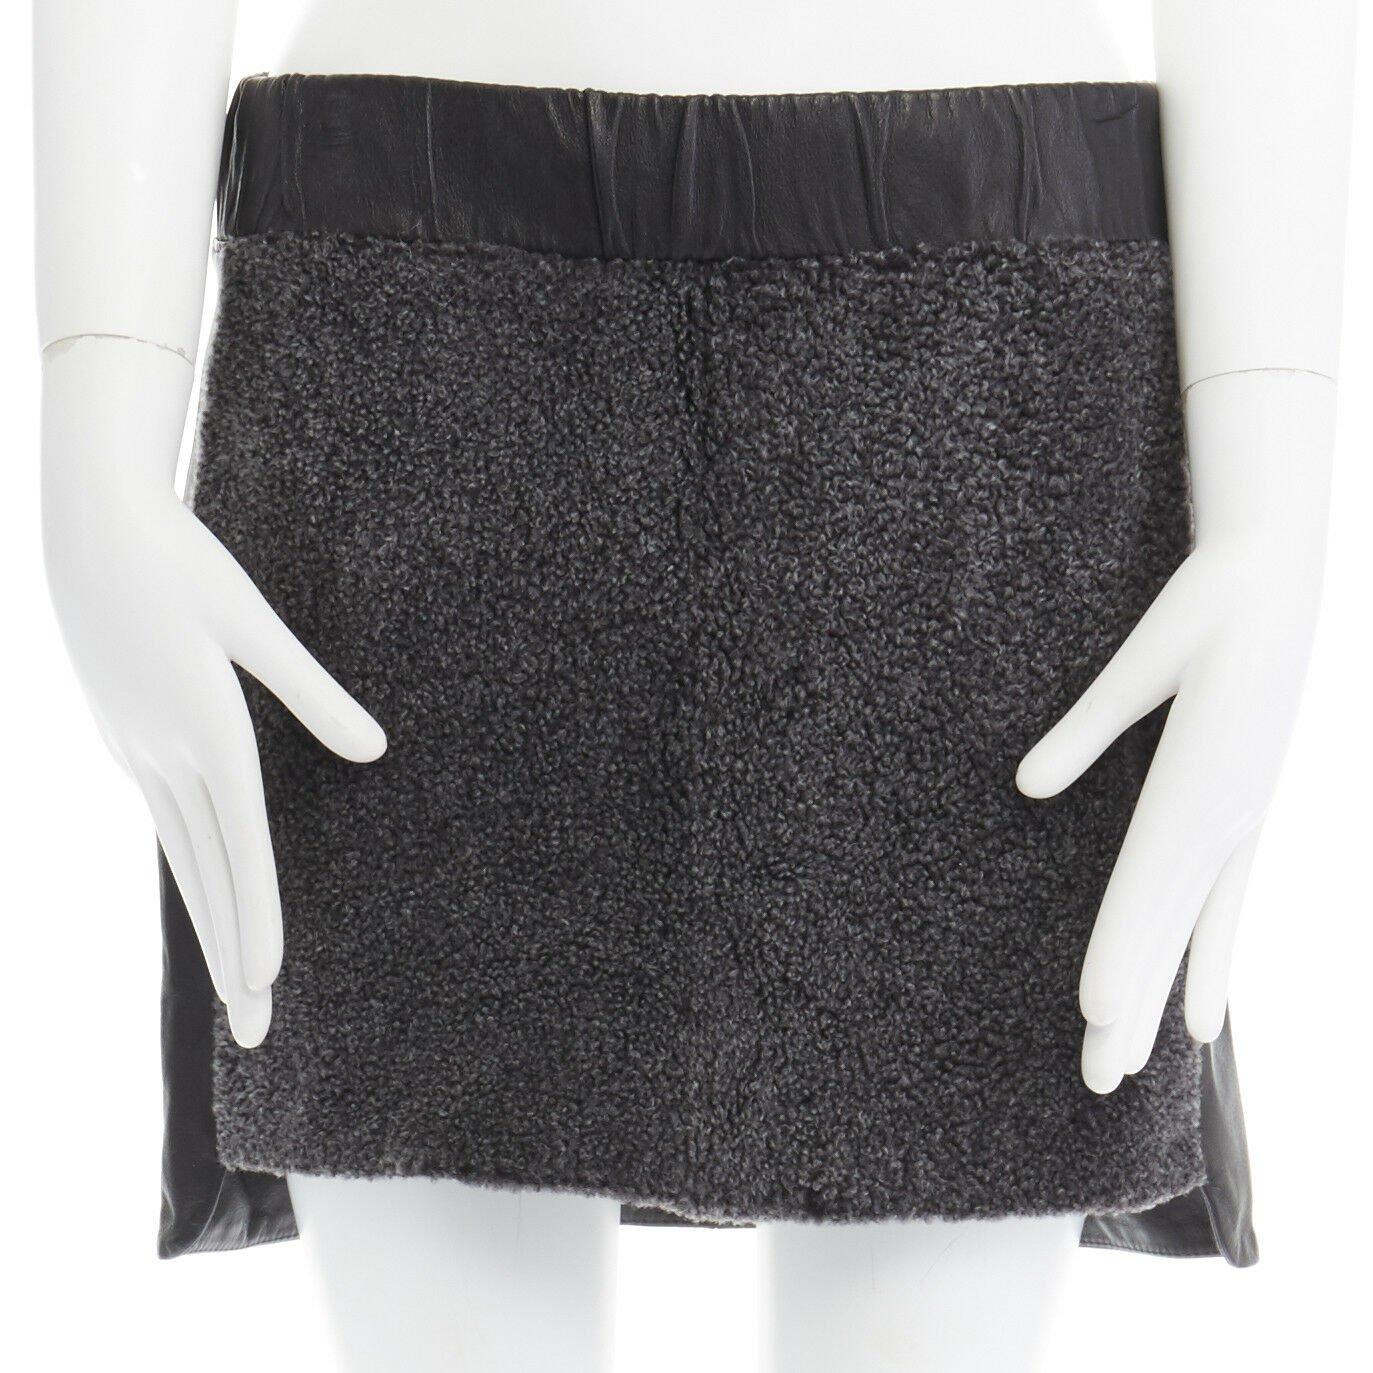 Black NEIL BARRETT grey shearling front panel black leather step hem mini skirt S 30